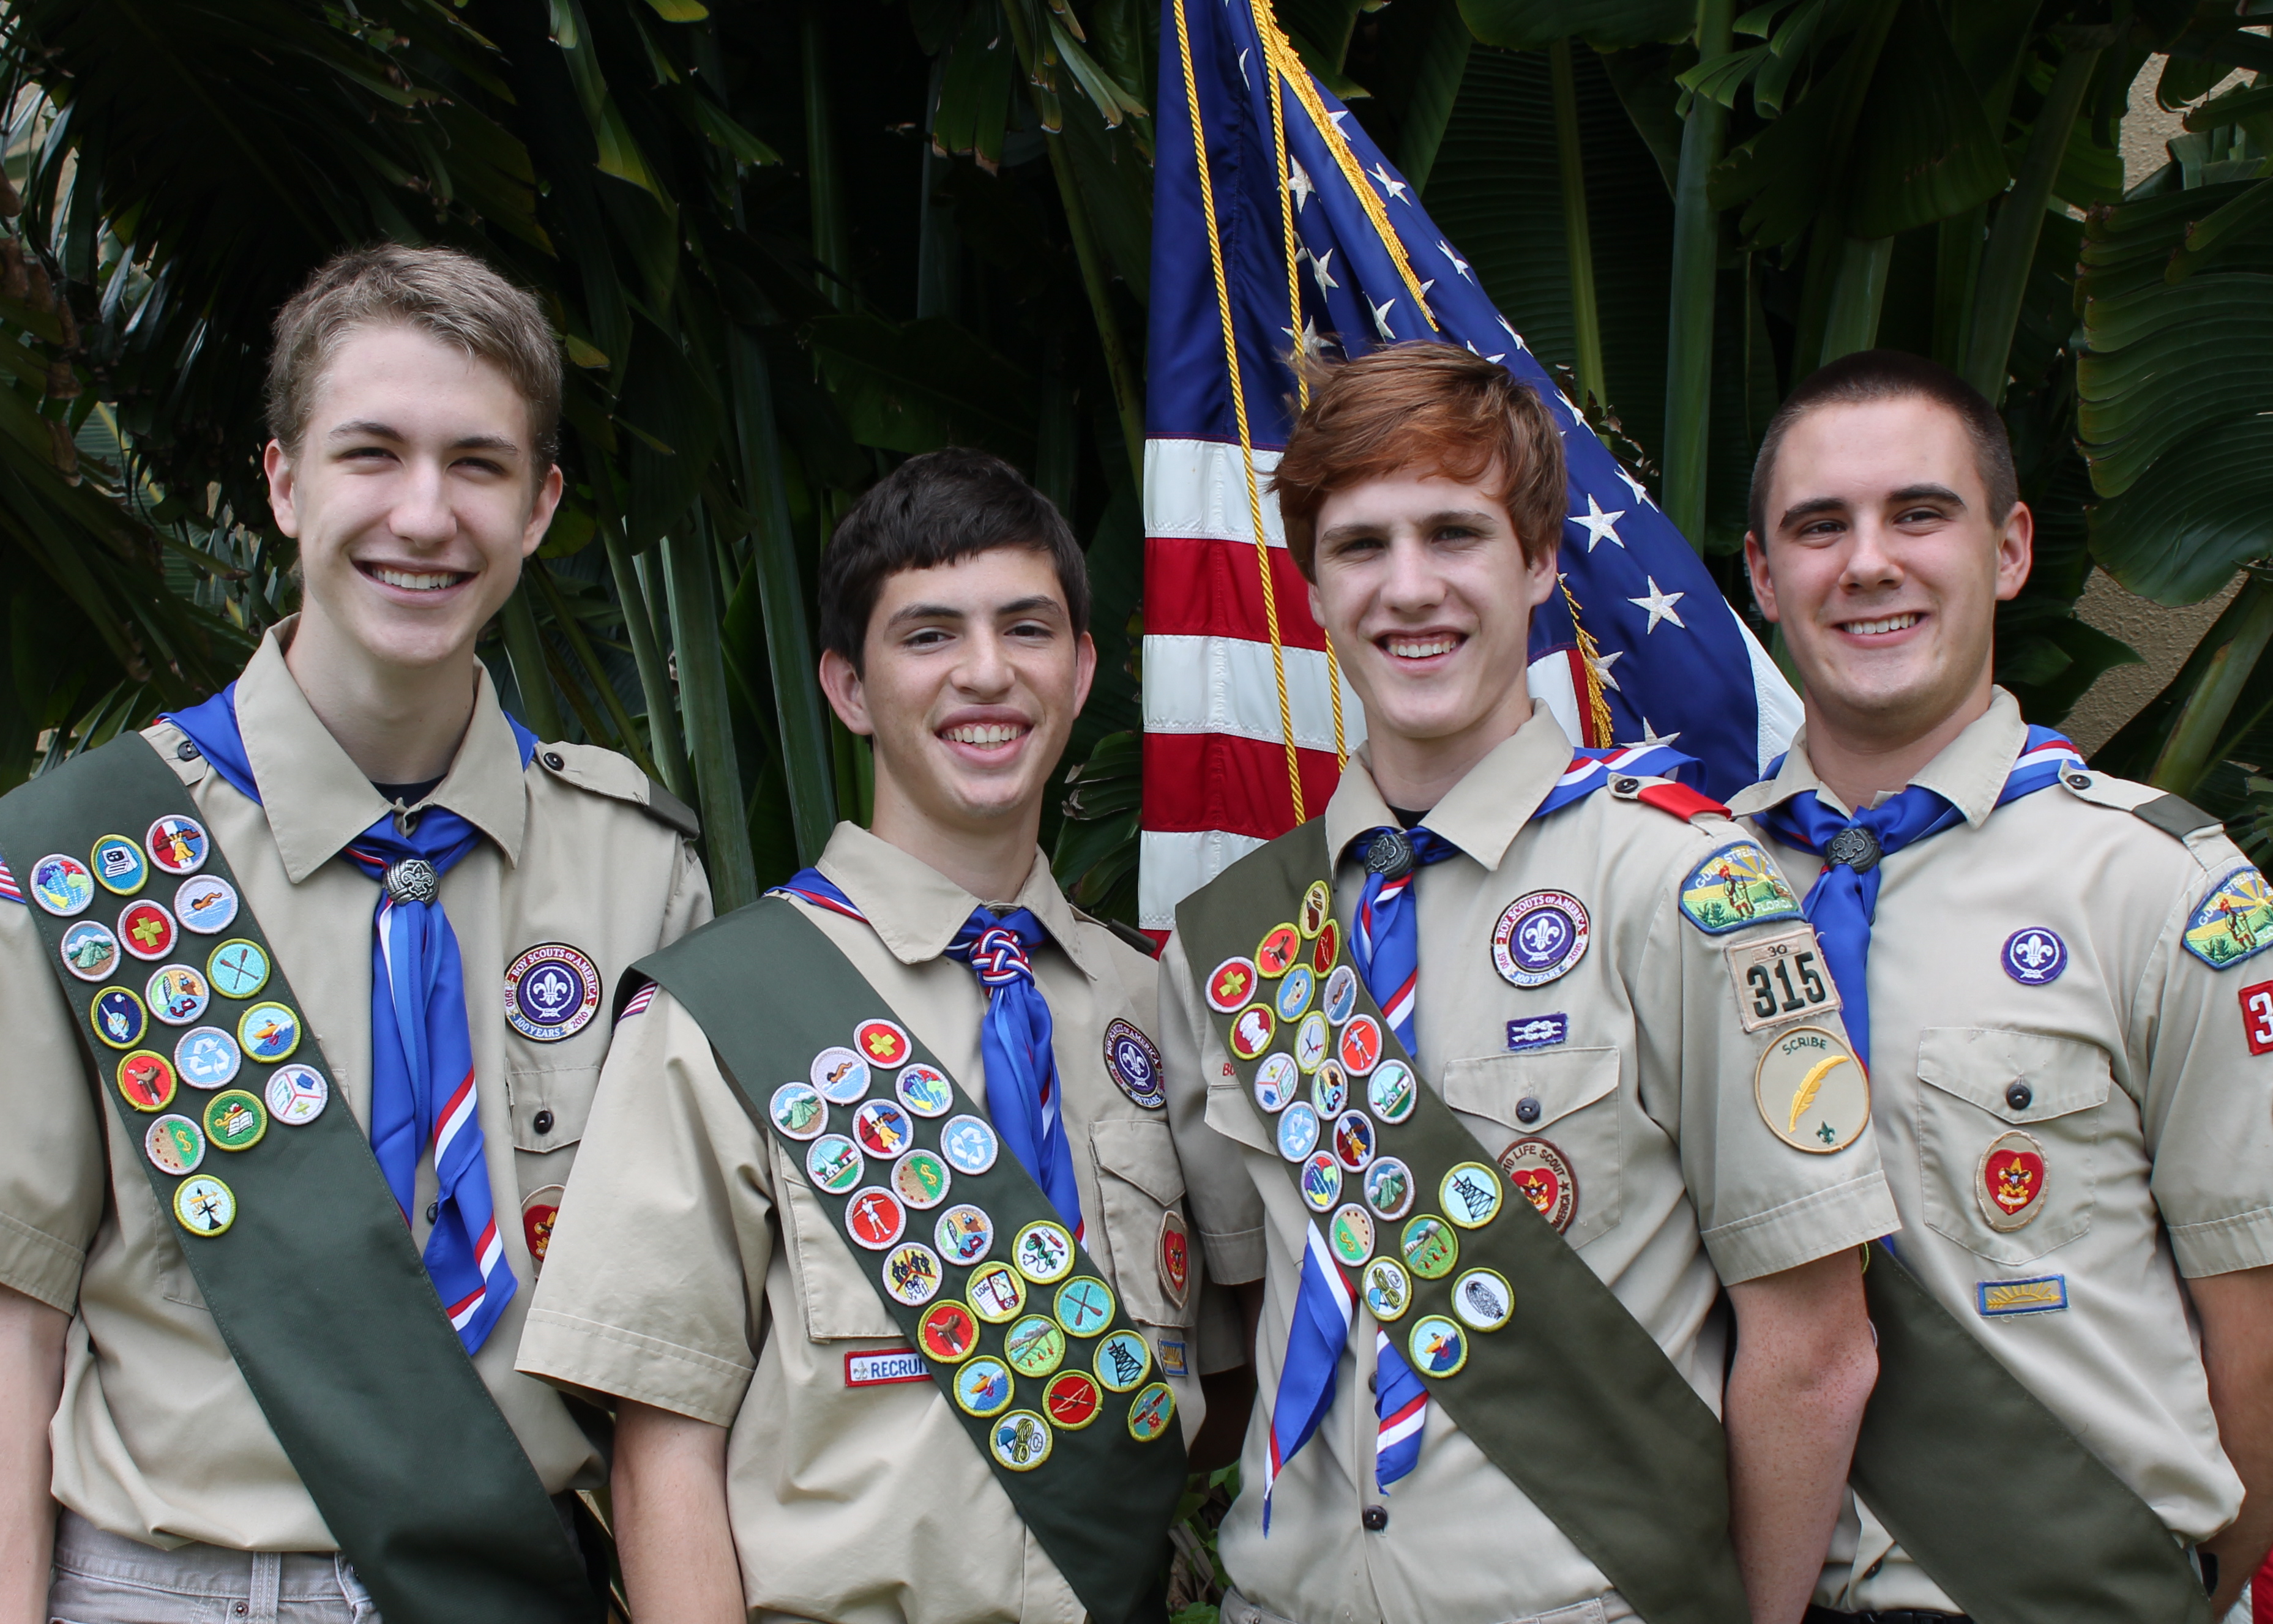 Boca Raton Eagle Scouts 2012.